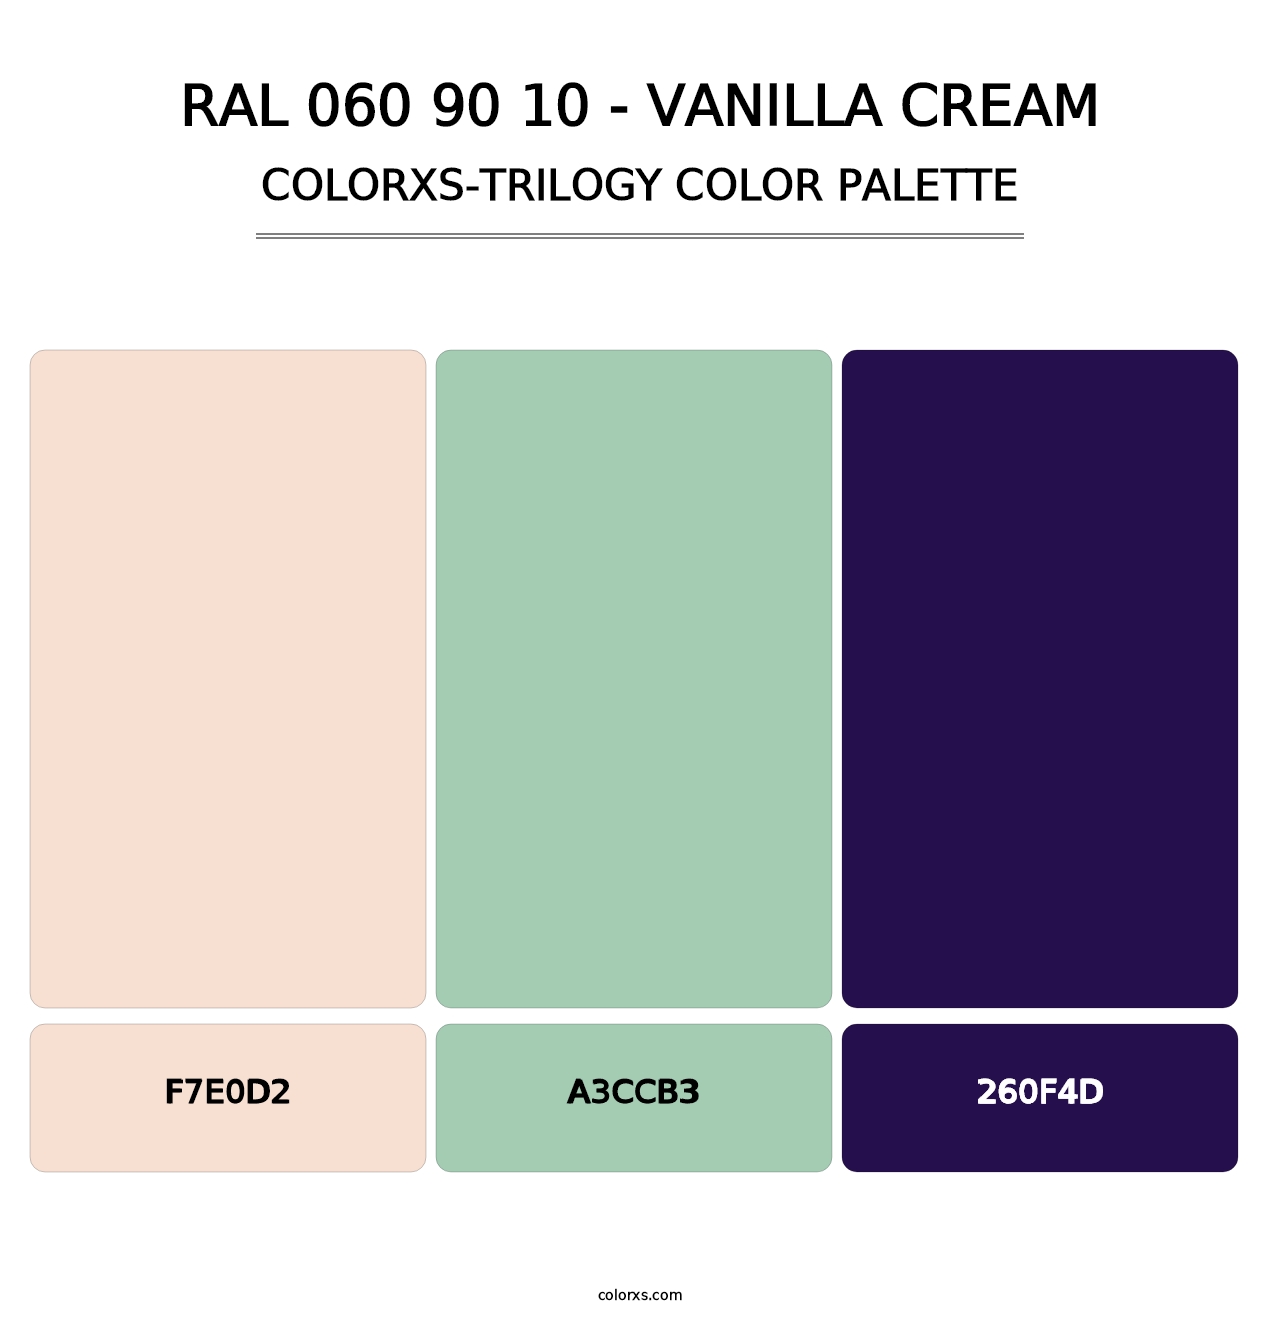 RAL 060 90 10 - Vanilla Cream - Colorxs Trilogy Palette